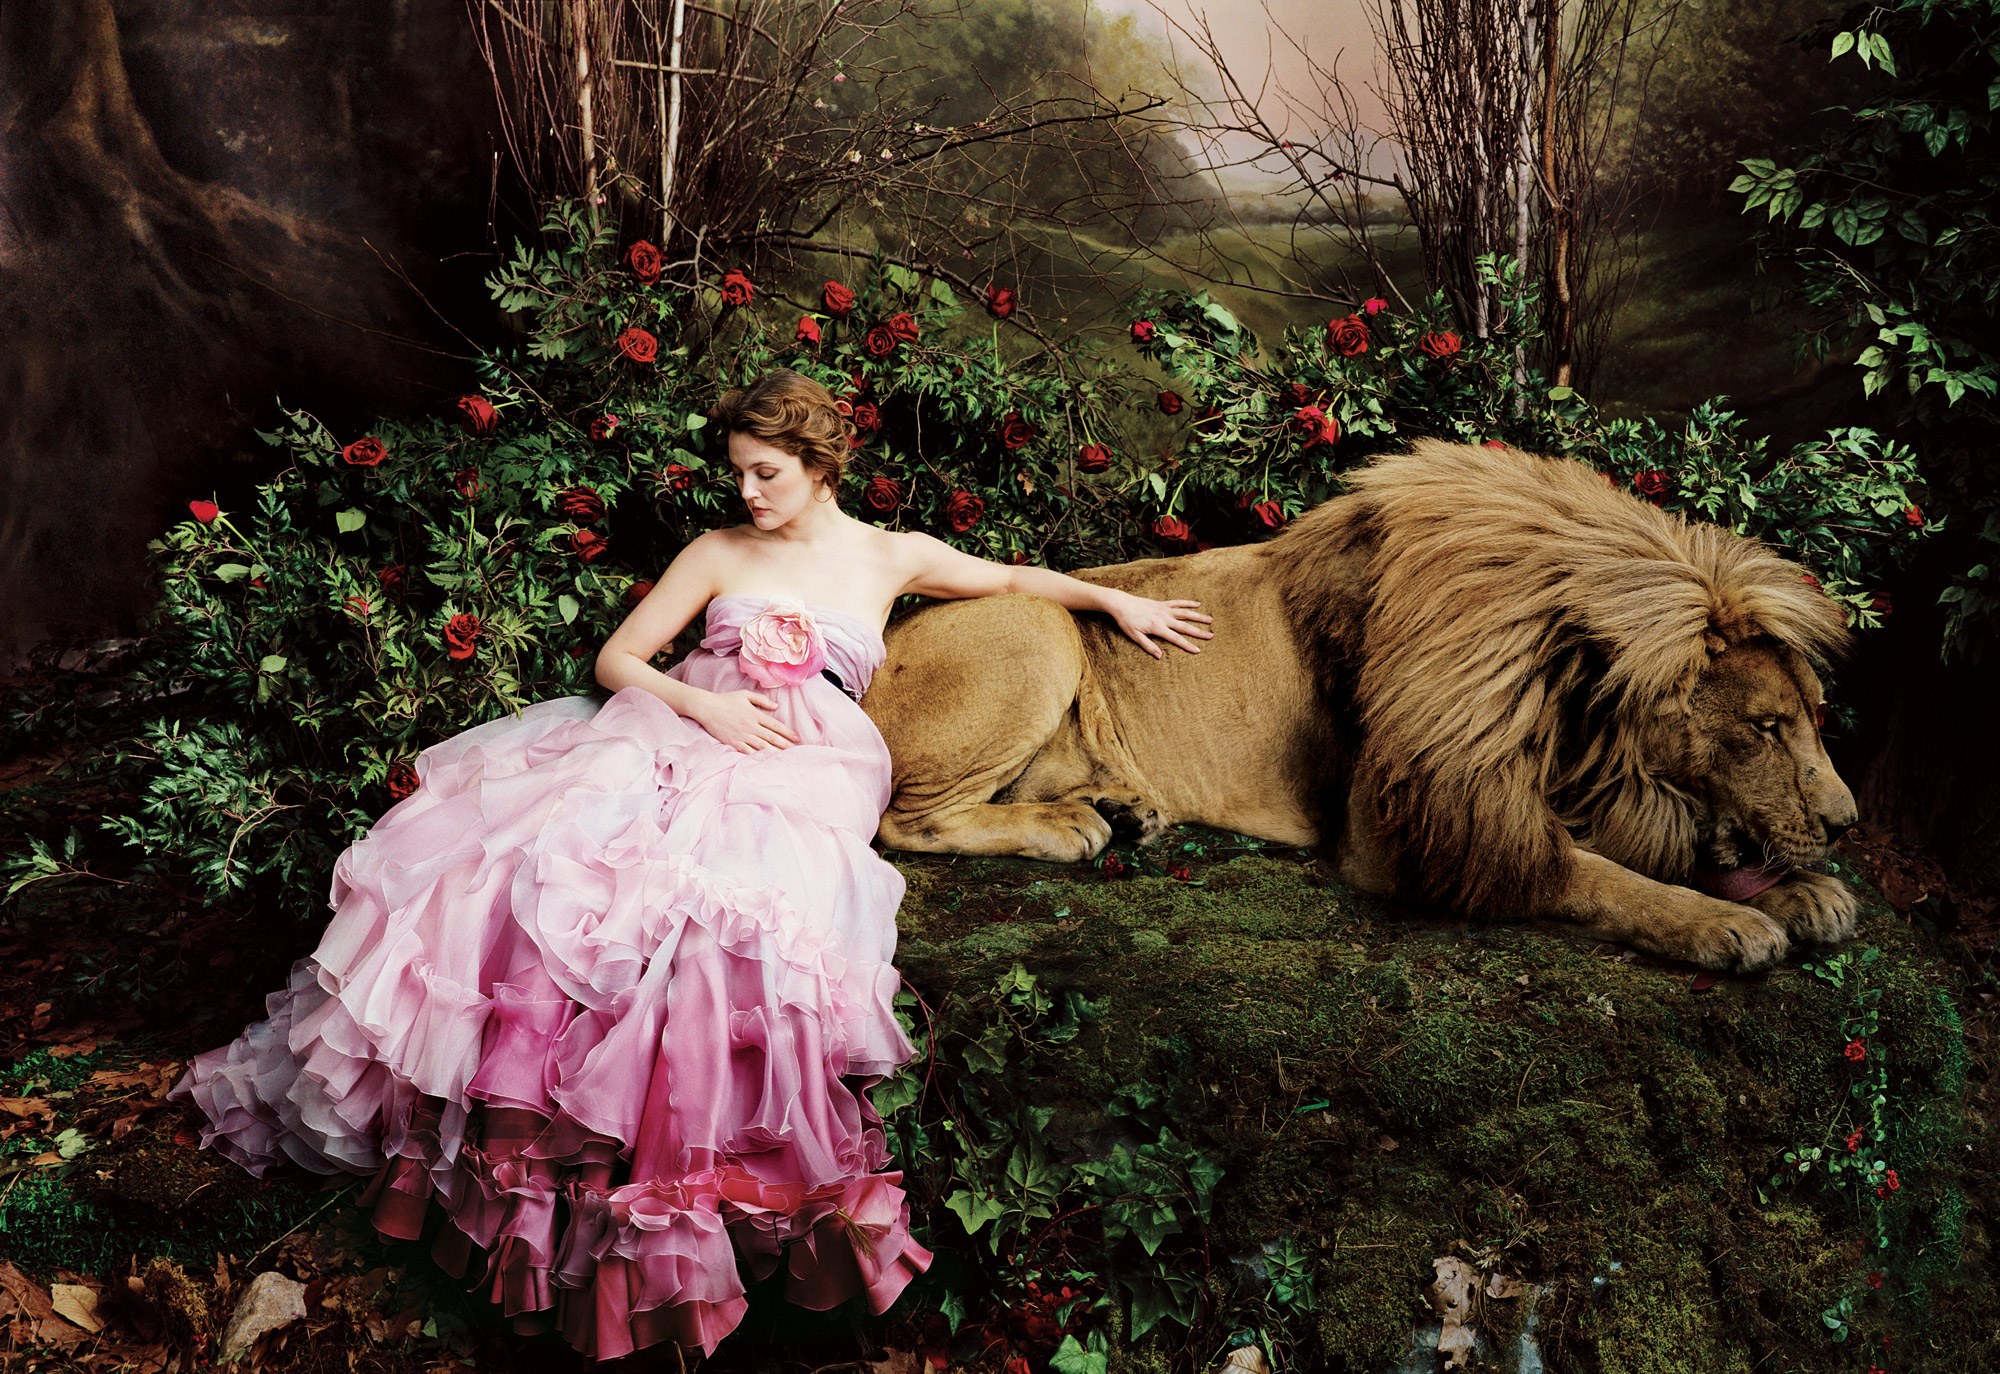 celebrity, drew barrymore, forest, lion, manipulation, photoshop, pink dress